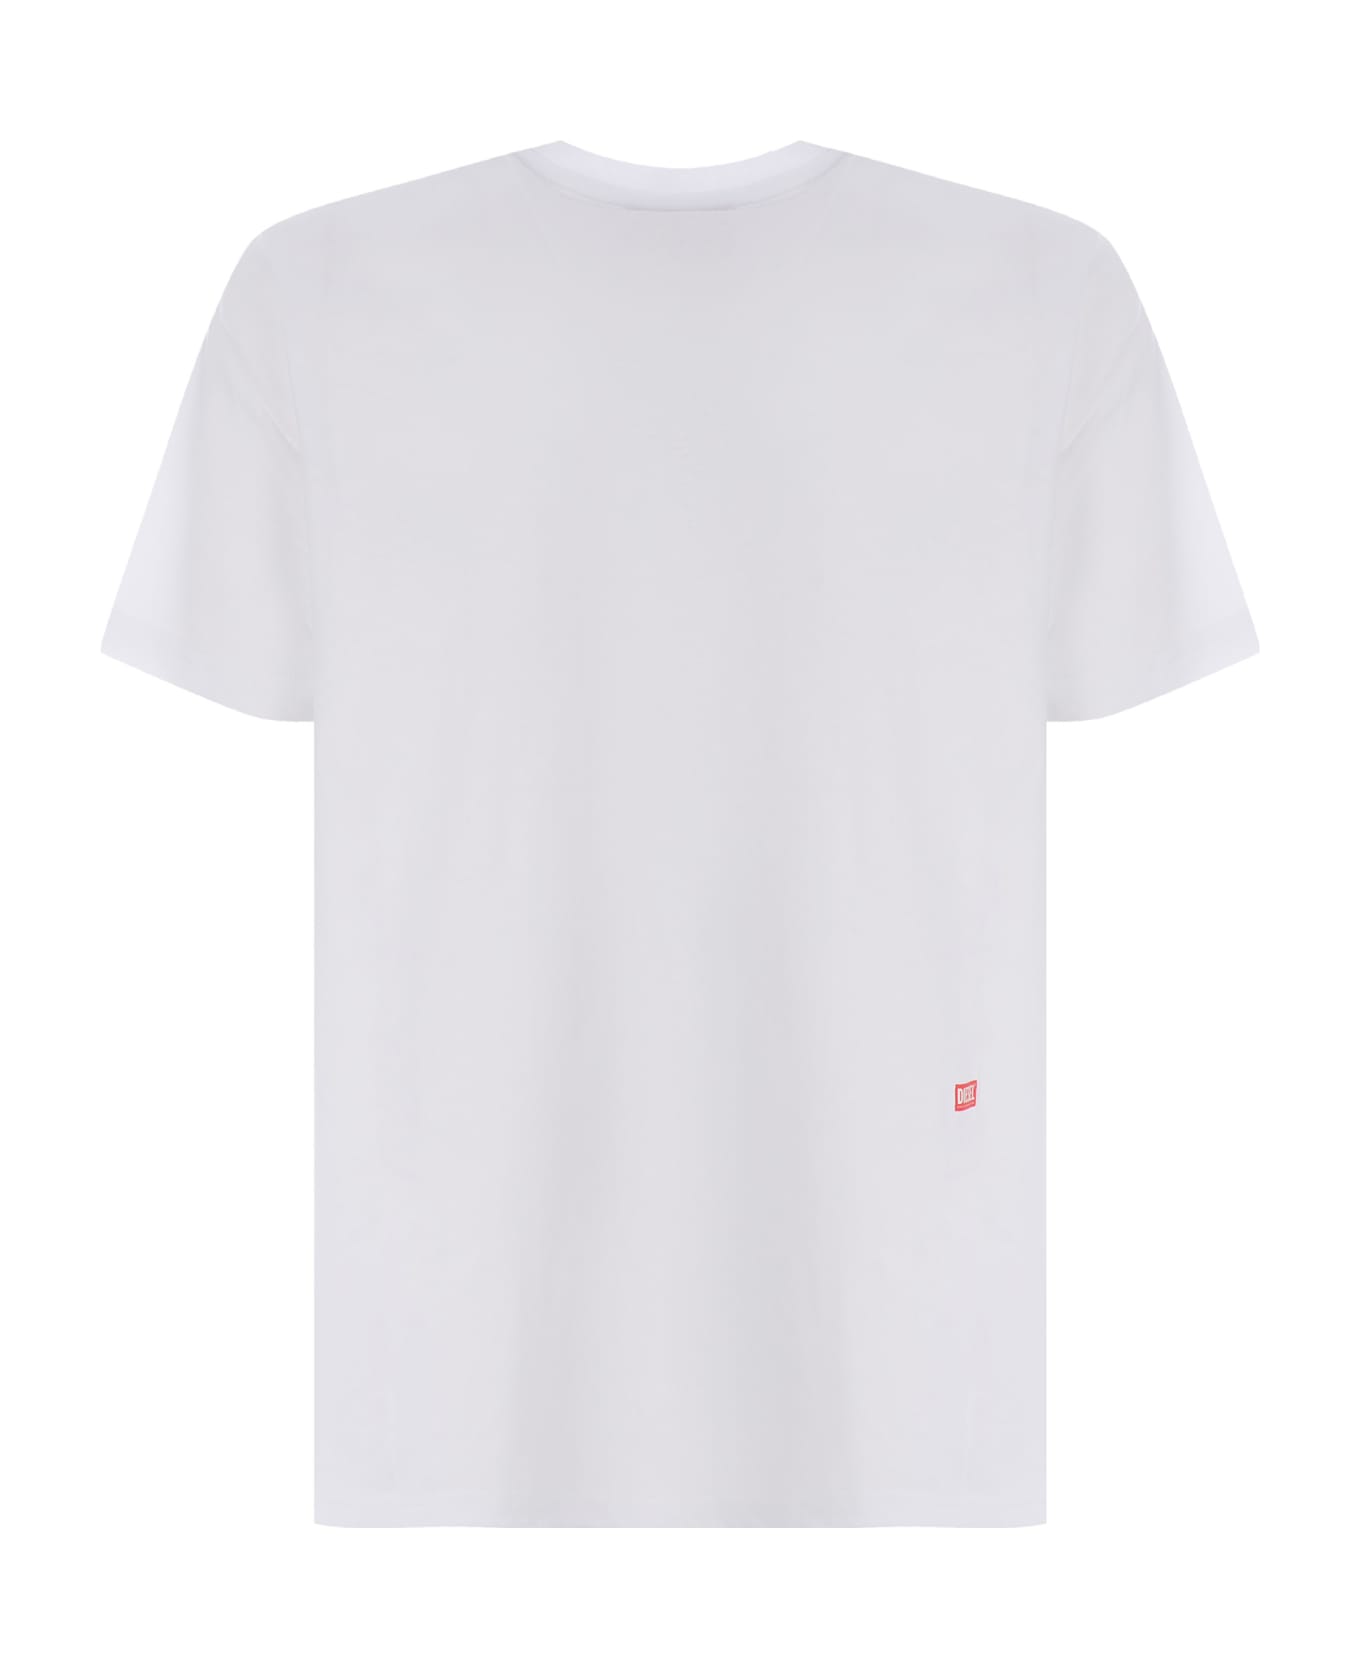 Diesel T-shirt Diesel "t-just-n11" Made Of Cotton Jersey - Bianco